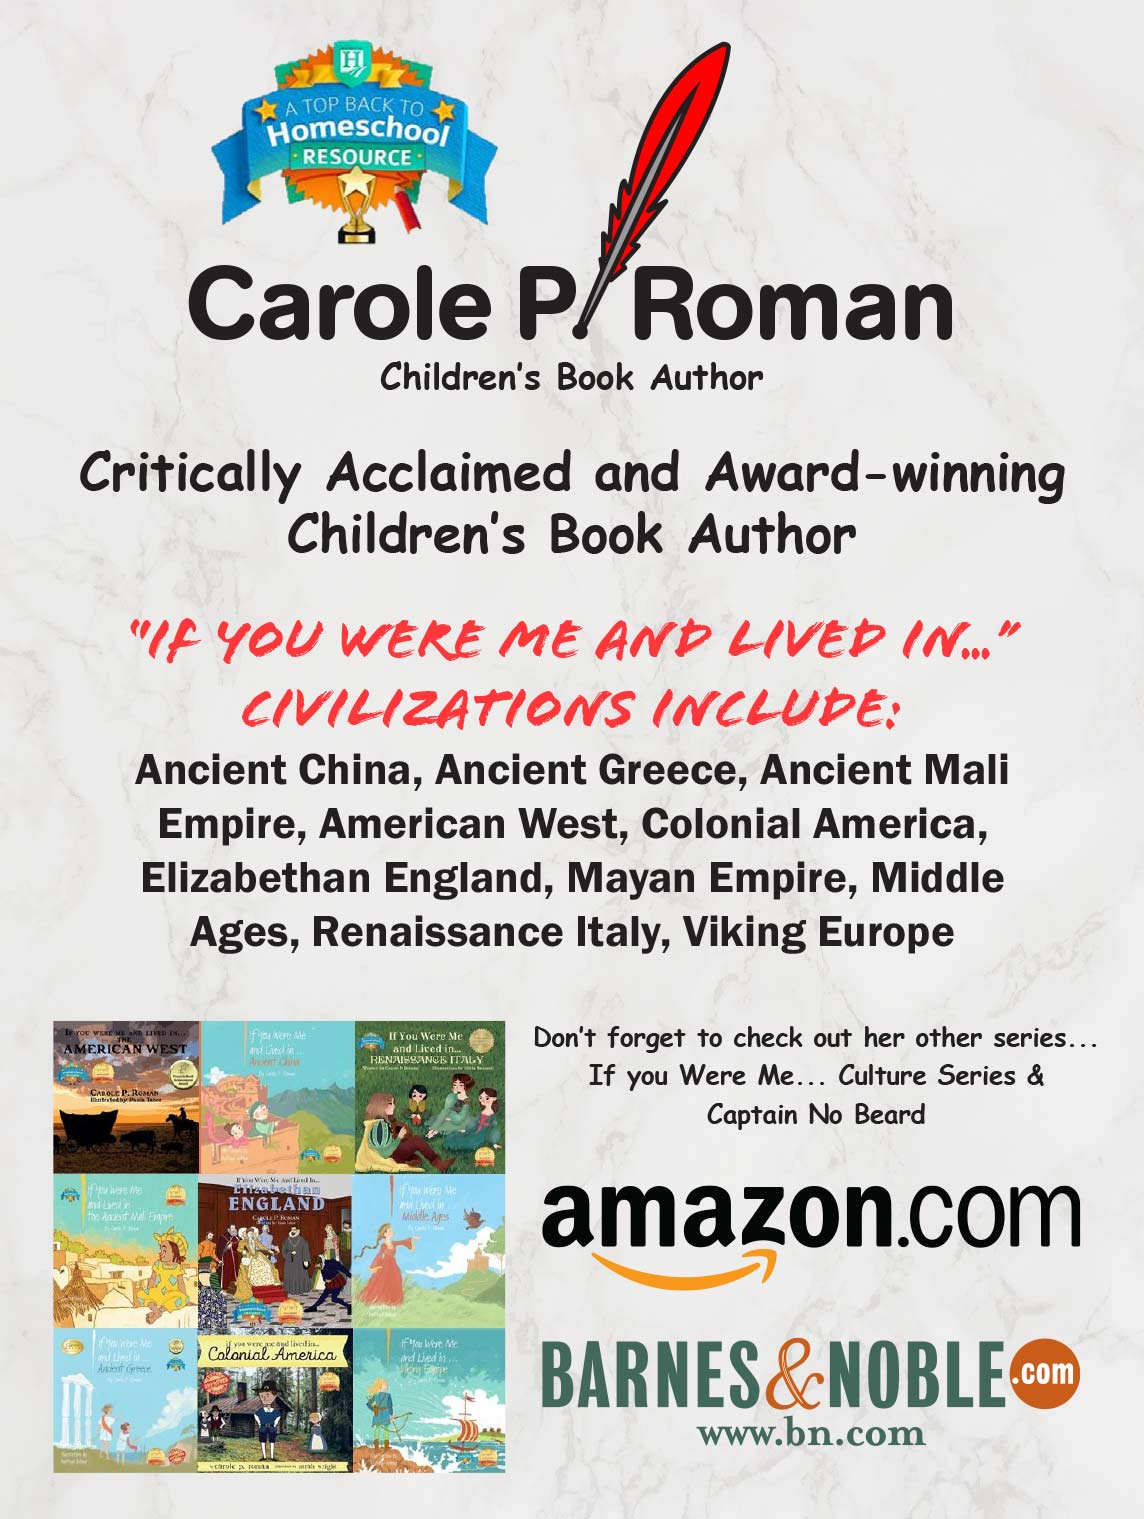 Carole P. Roman, Children's Book Author Advertisement